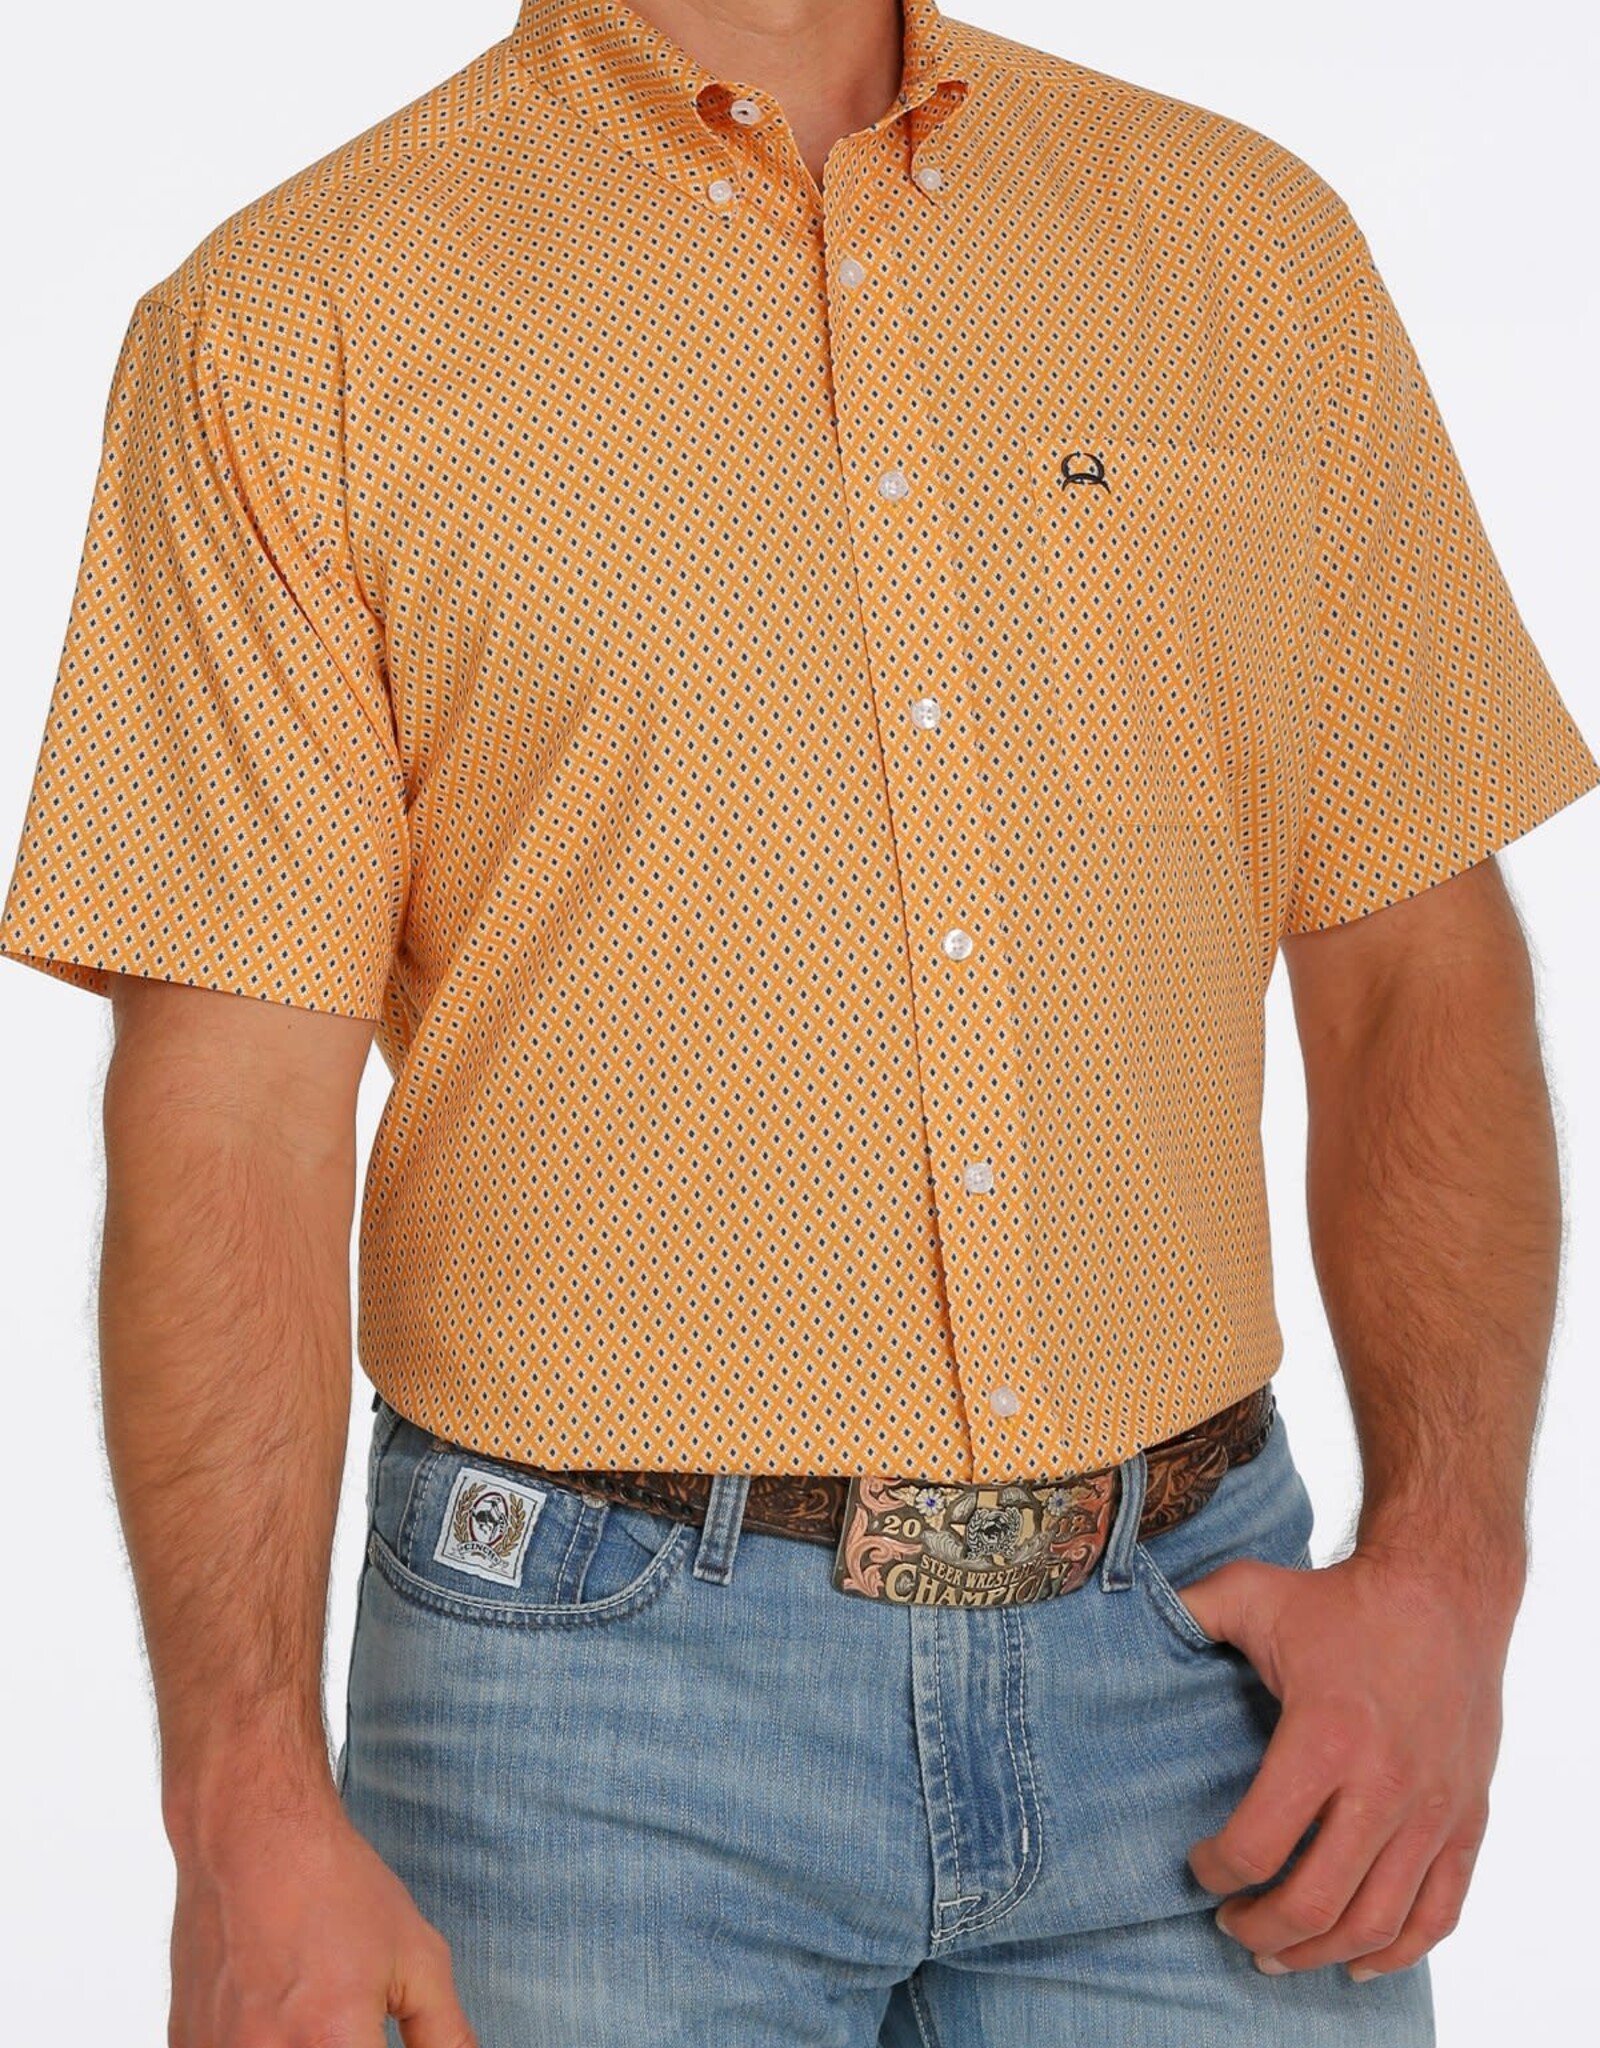 Cinch Cinch Men's Arena Flex Orange Print Short Sleeve Shirt